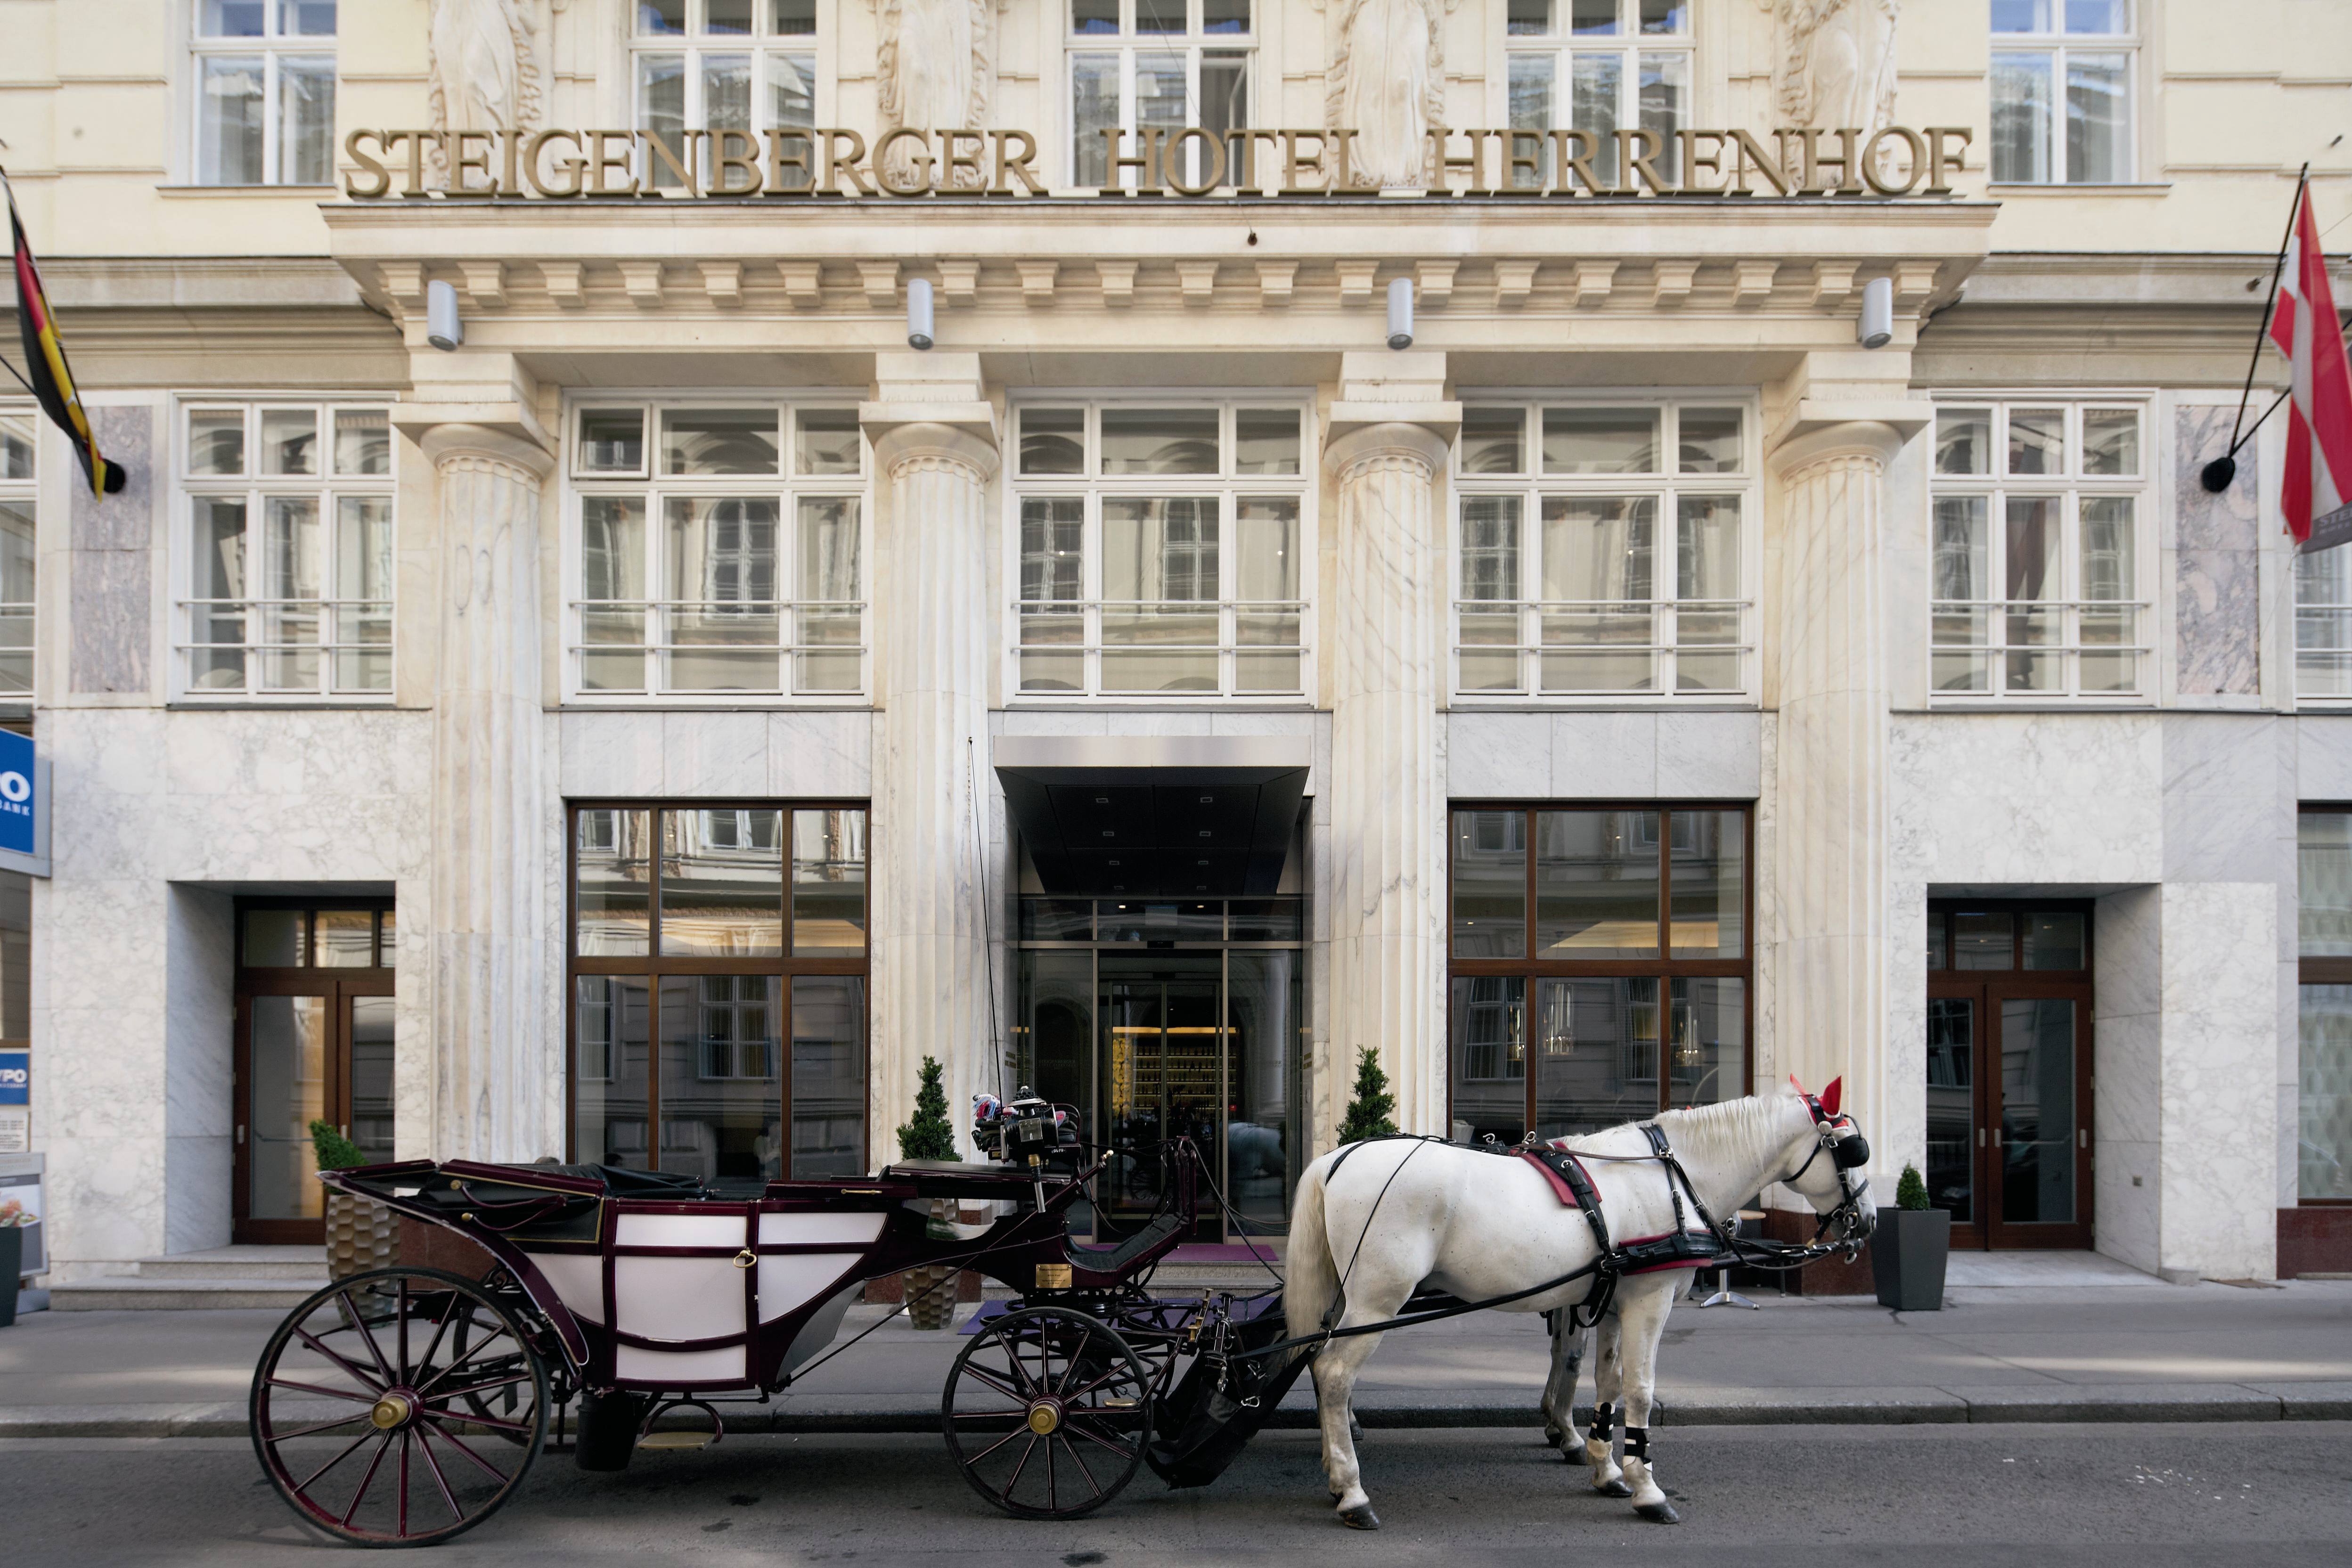 Steigenberger Hotel Herrenhof, Wien